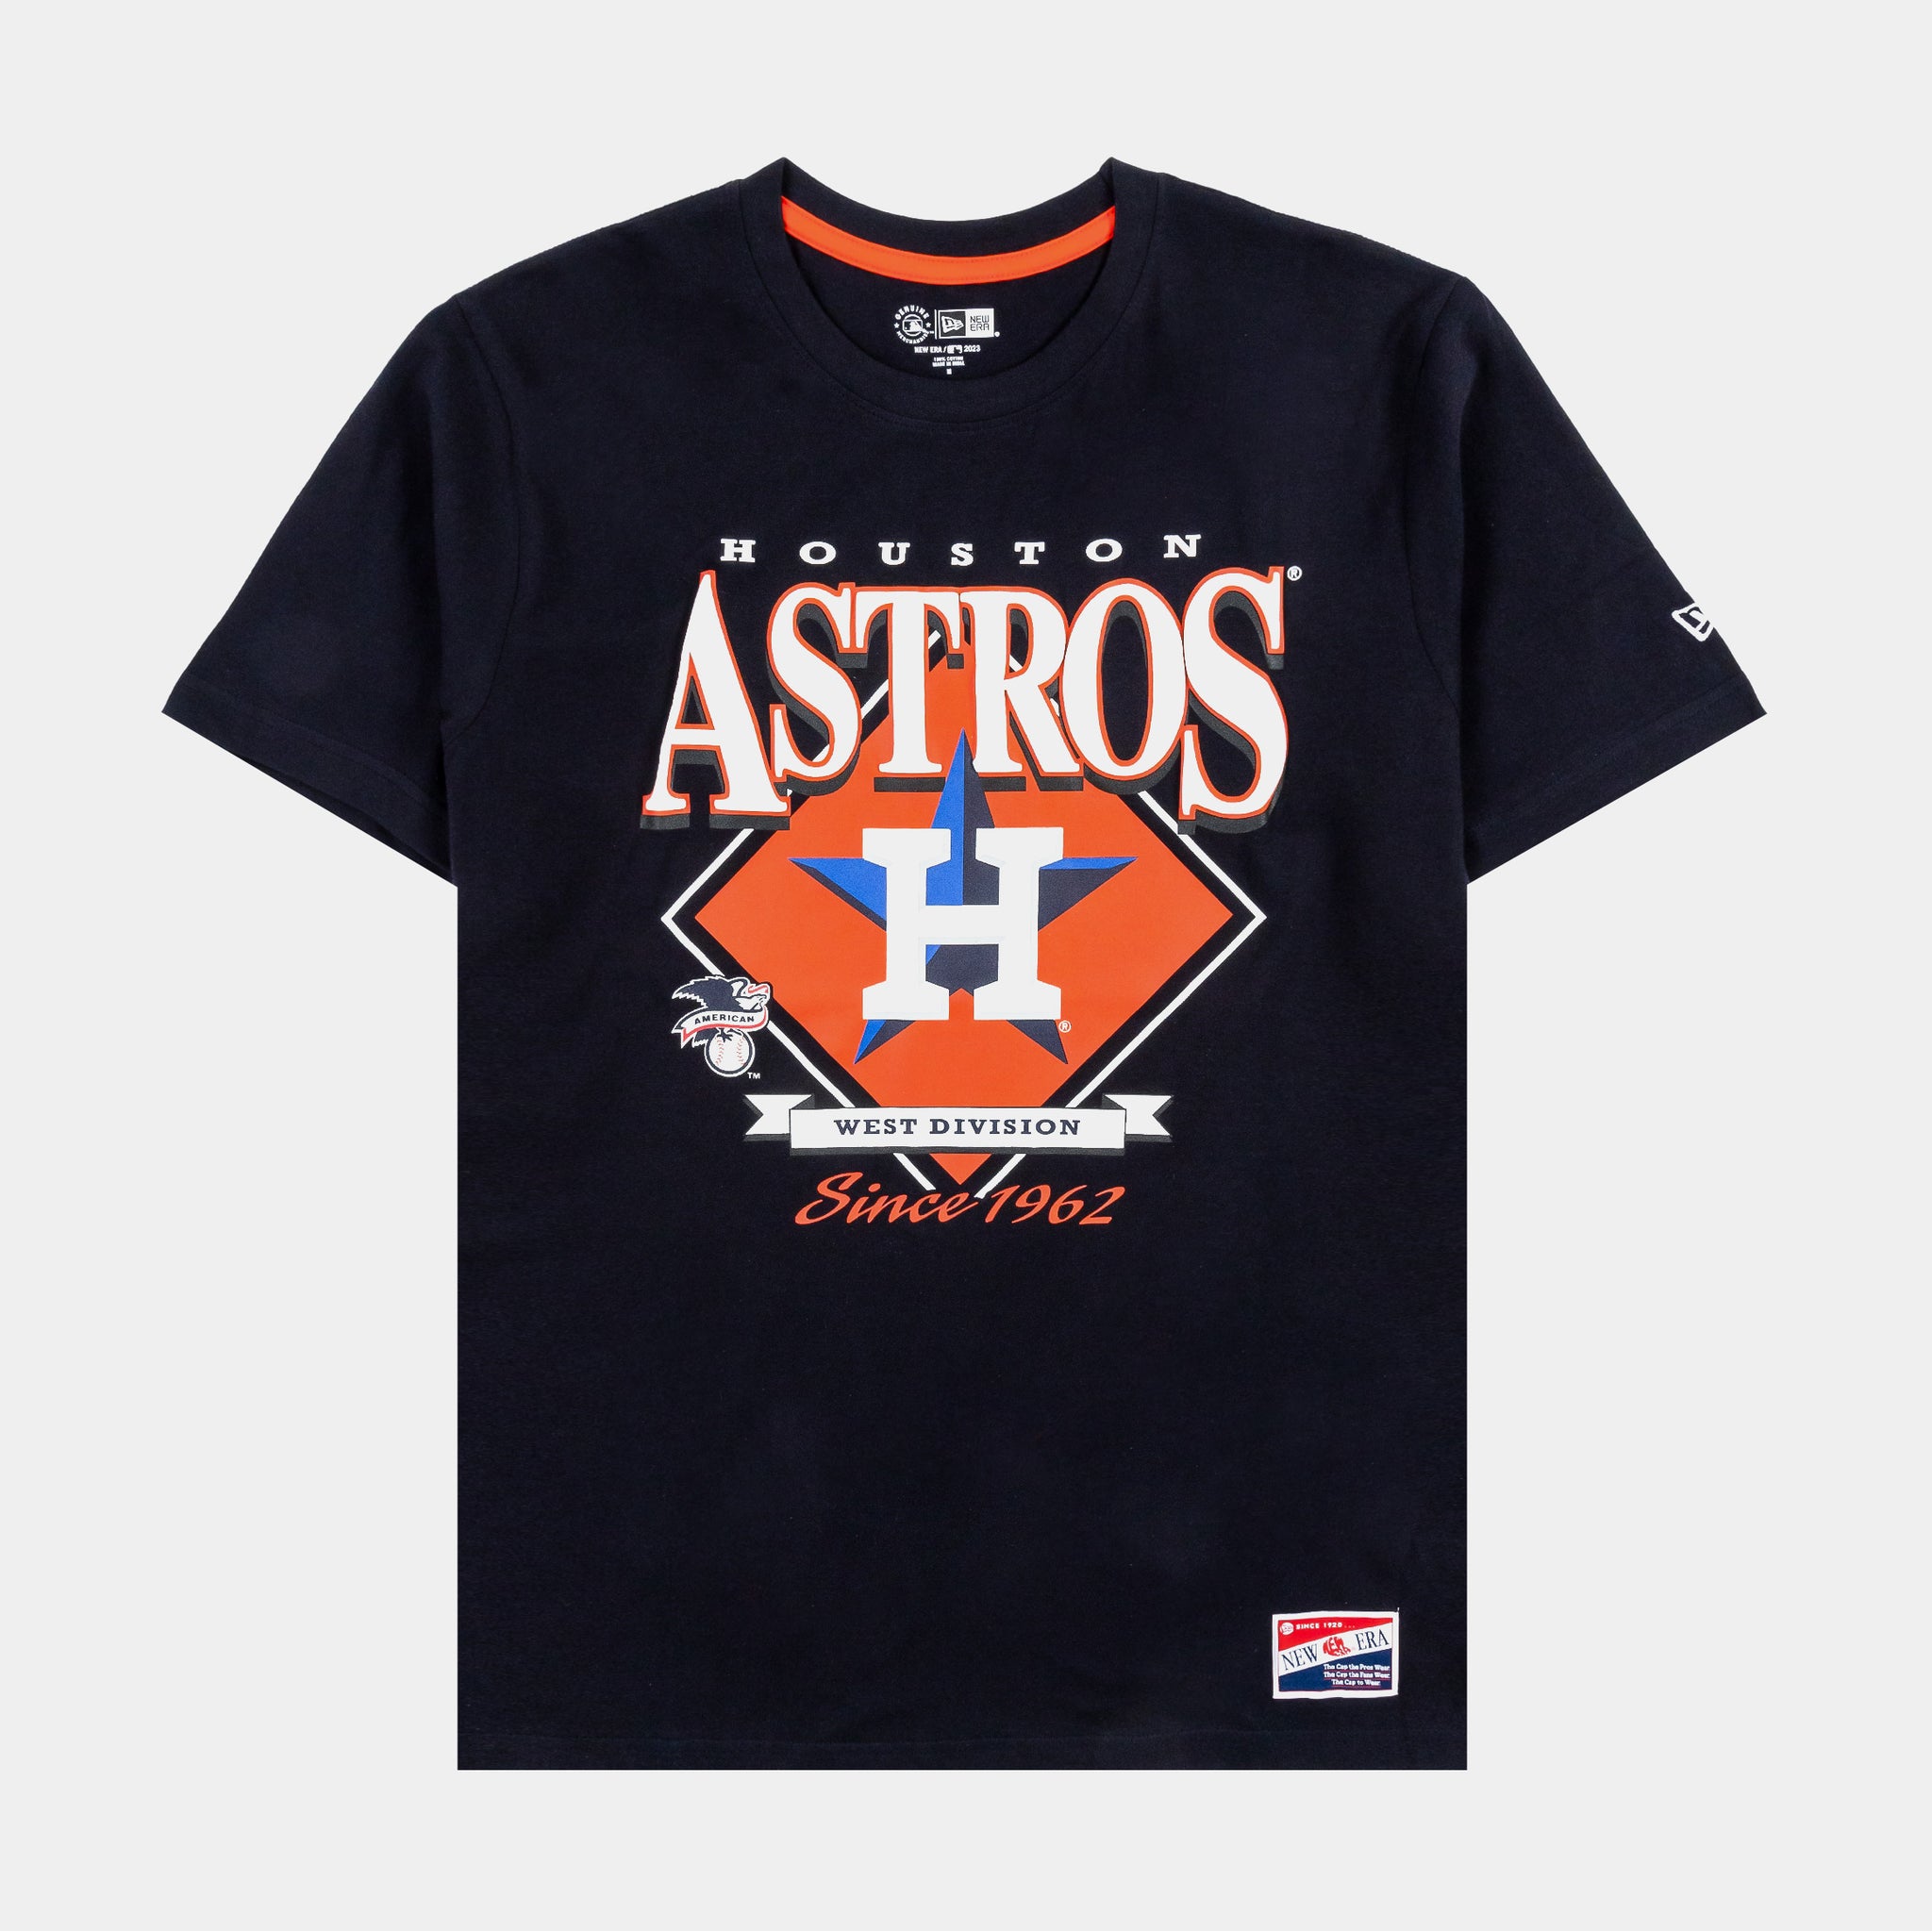 astros new t shirt